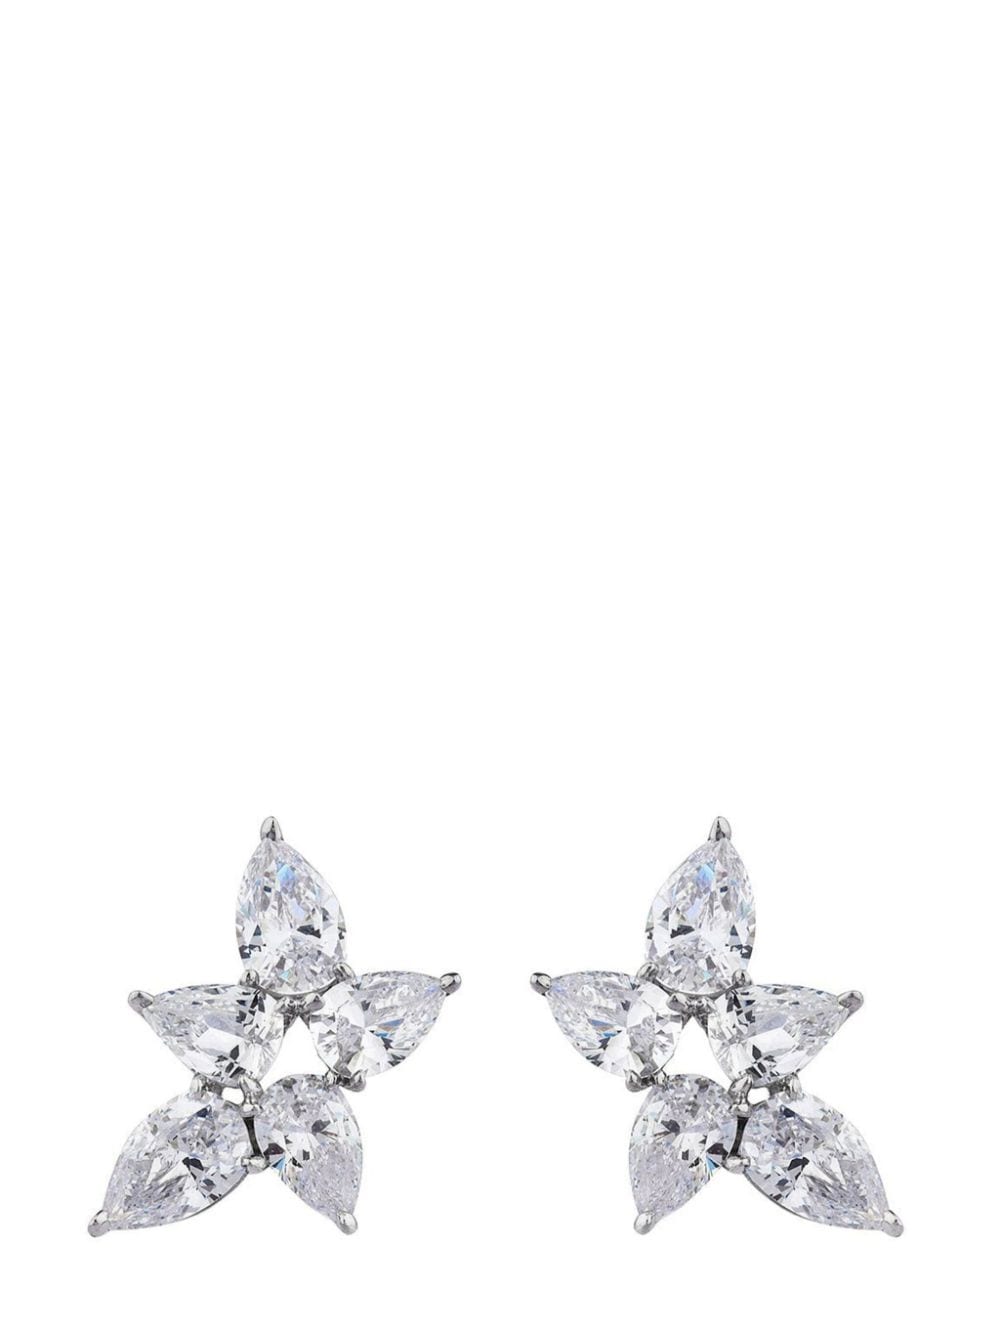 Fantasia By Deserio Pear Cluster Earrings In White